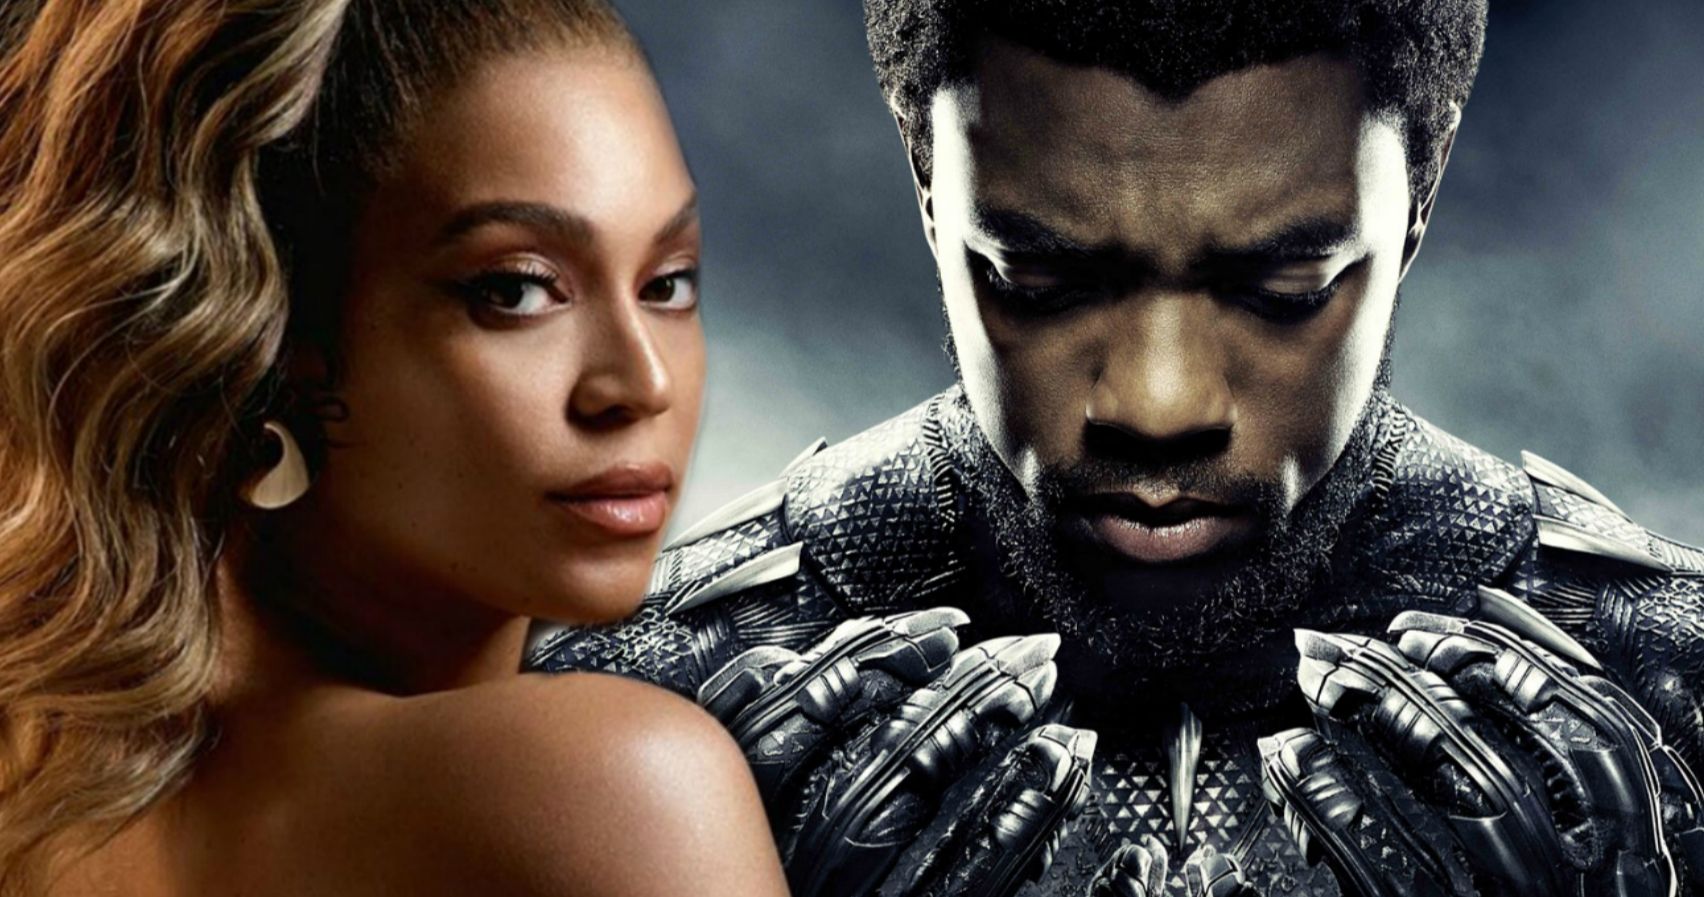 Beyonce Black Panther 2 Soundtrack Rumors Get Debunked